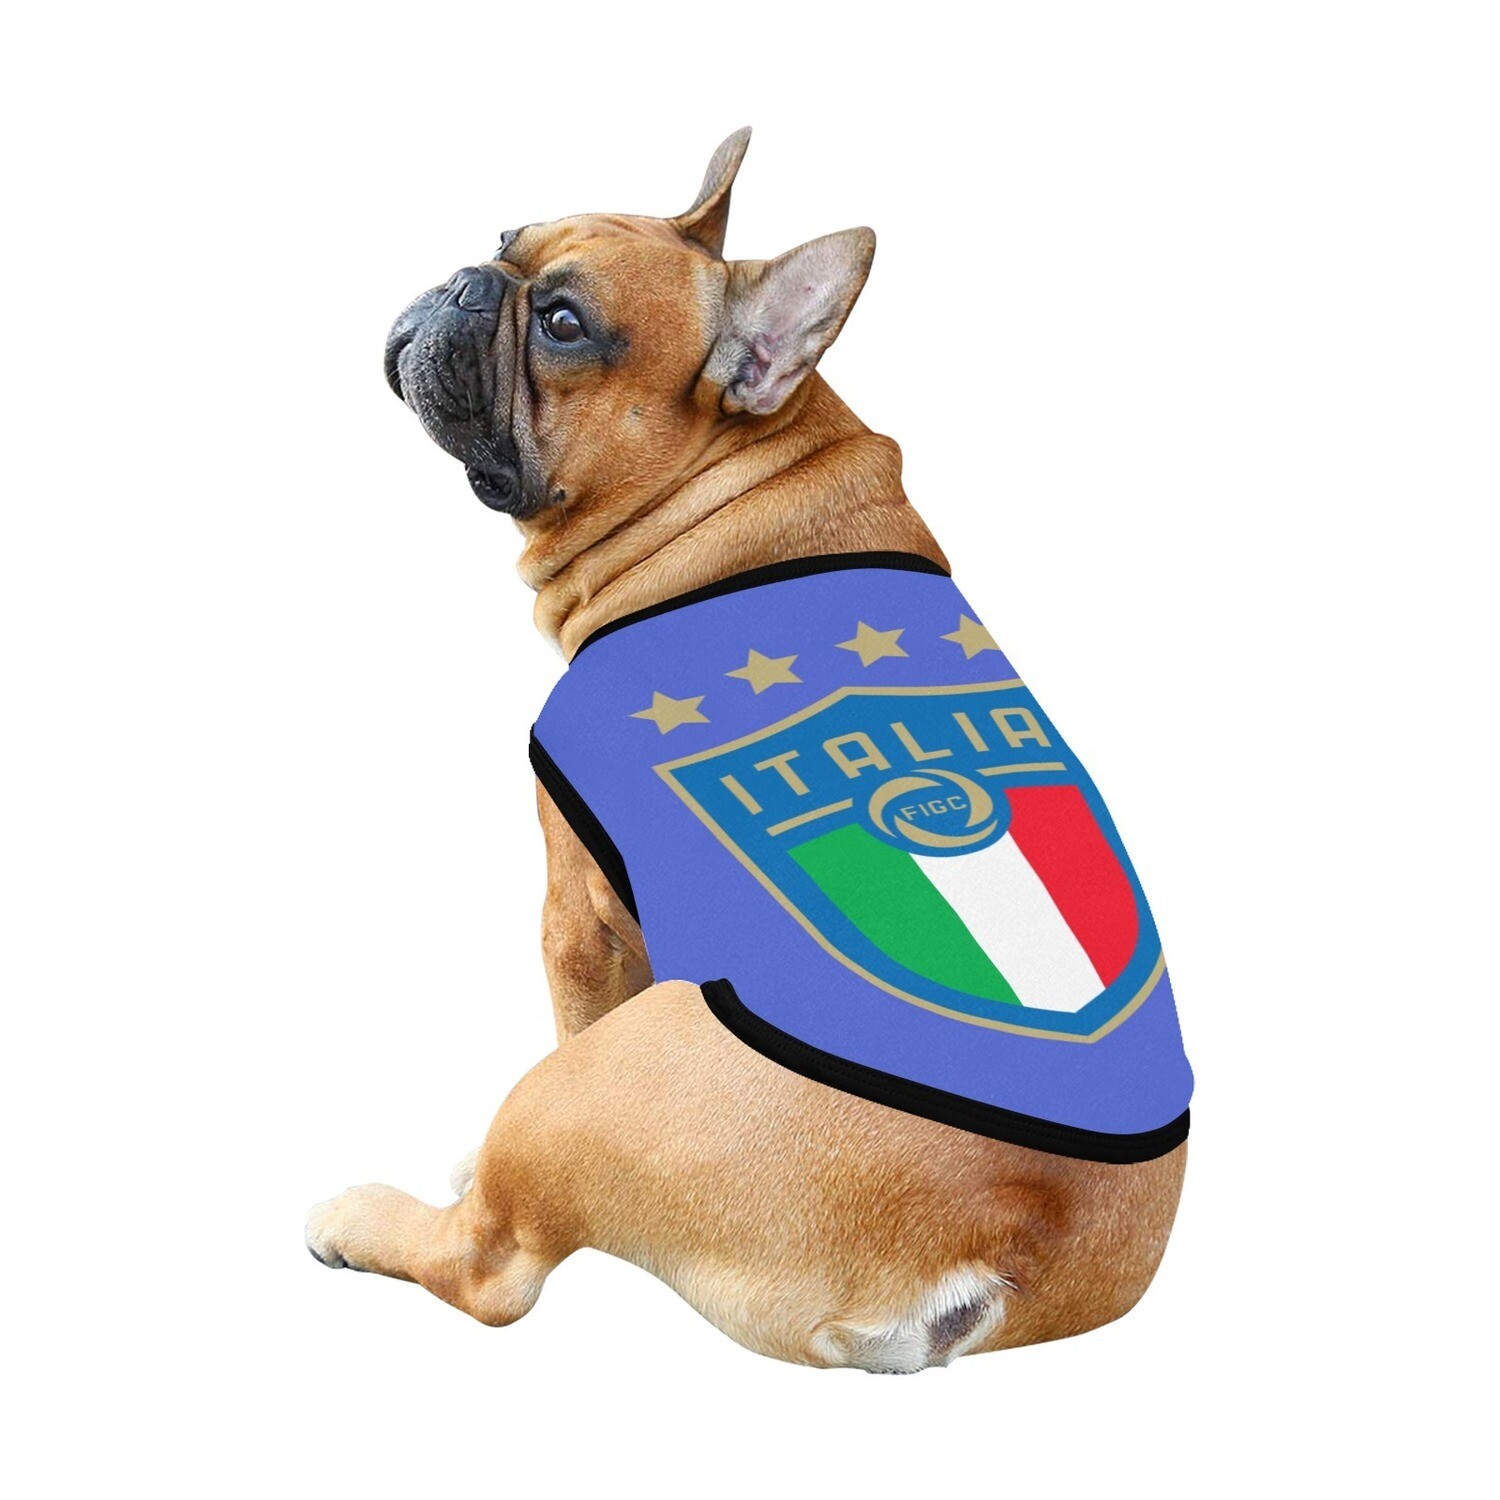 🐕🇮🇹⚽️ Gli Azzurri Italy  Soccer Team dog t-shirt, dog gift, dog tank top, dog shirt, dog clothes, gift, 7 sizes XS to 3XL,  Italian, Savoie blue